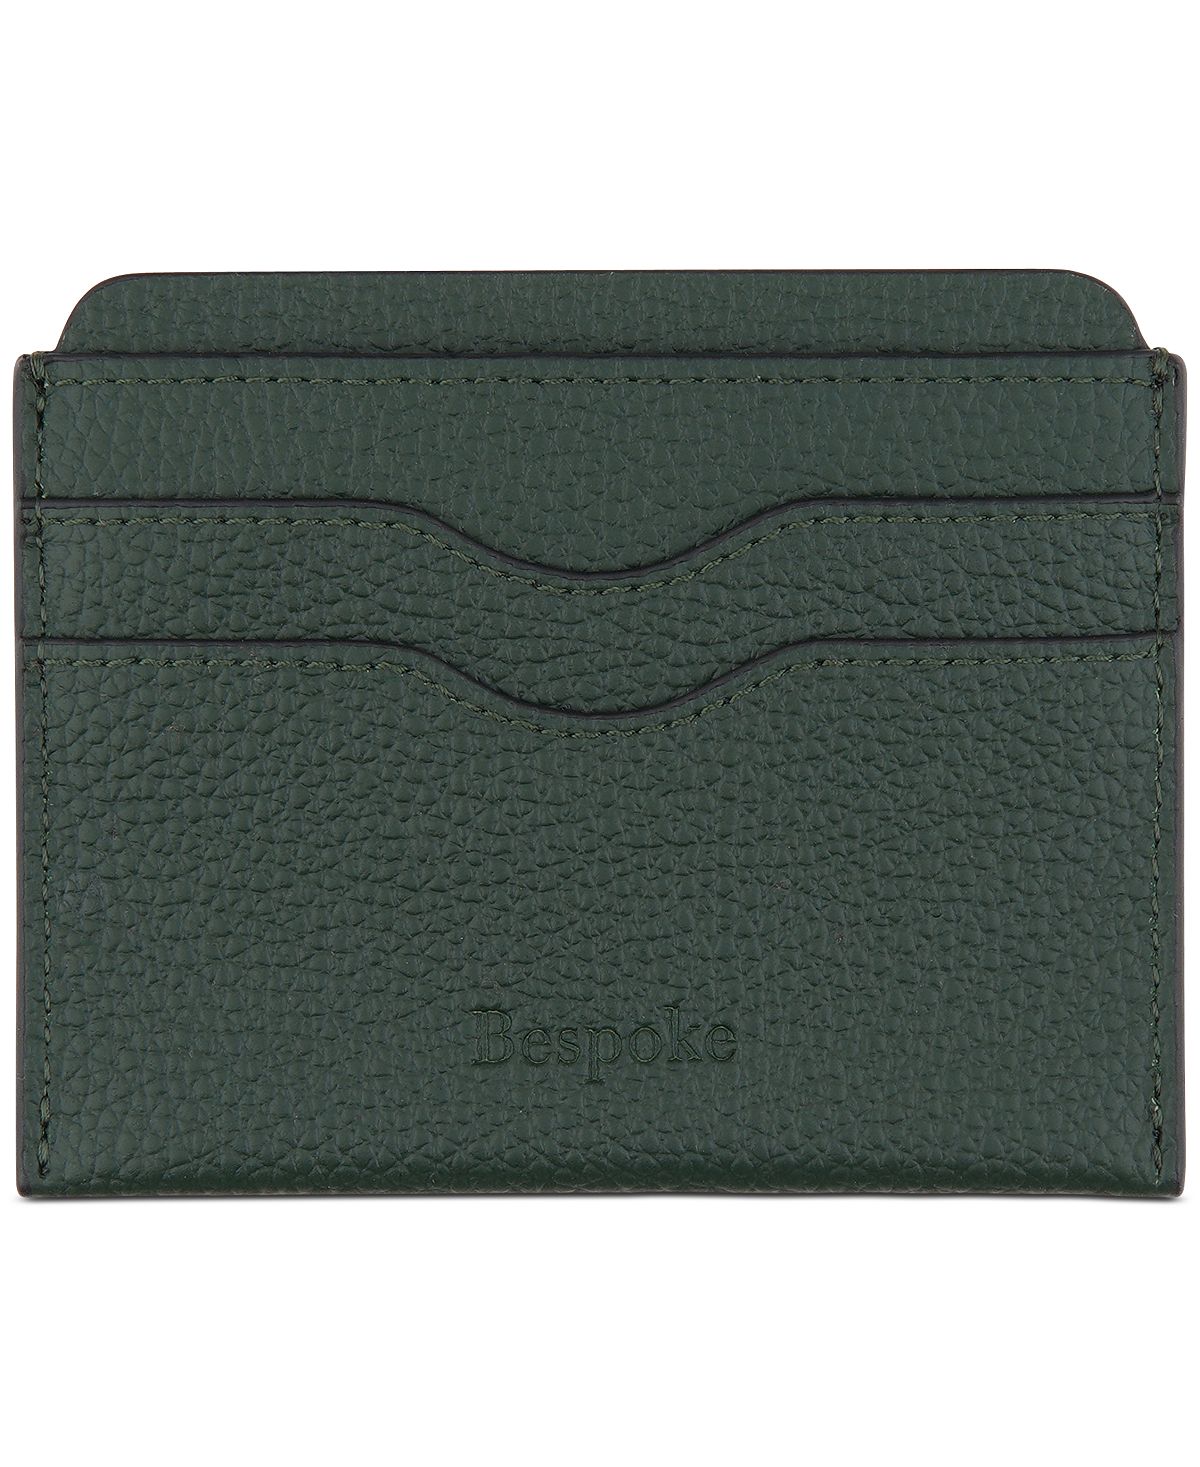 Bespoke Pebble Leather Card Case Dark Green